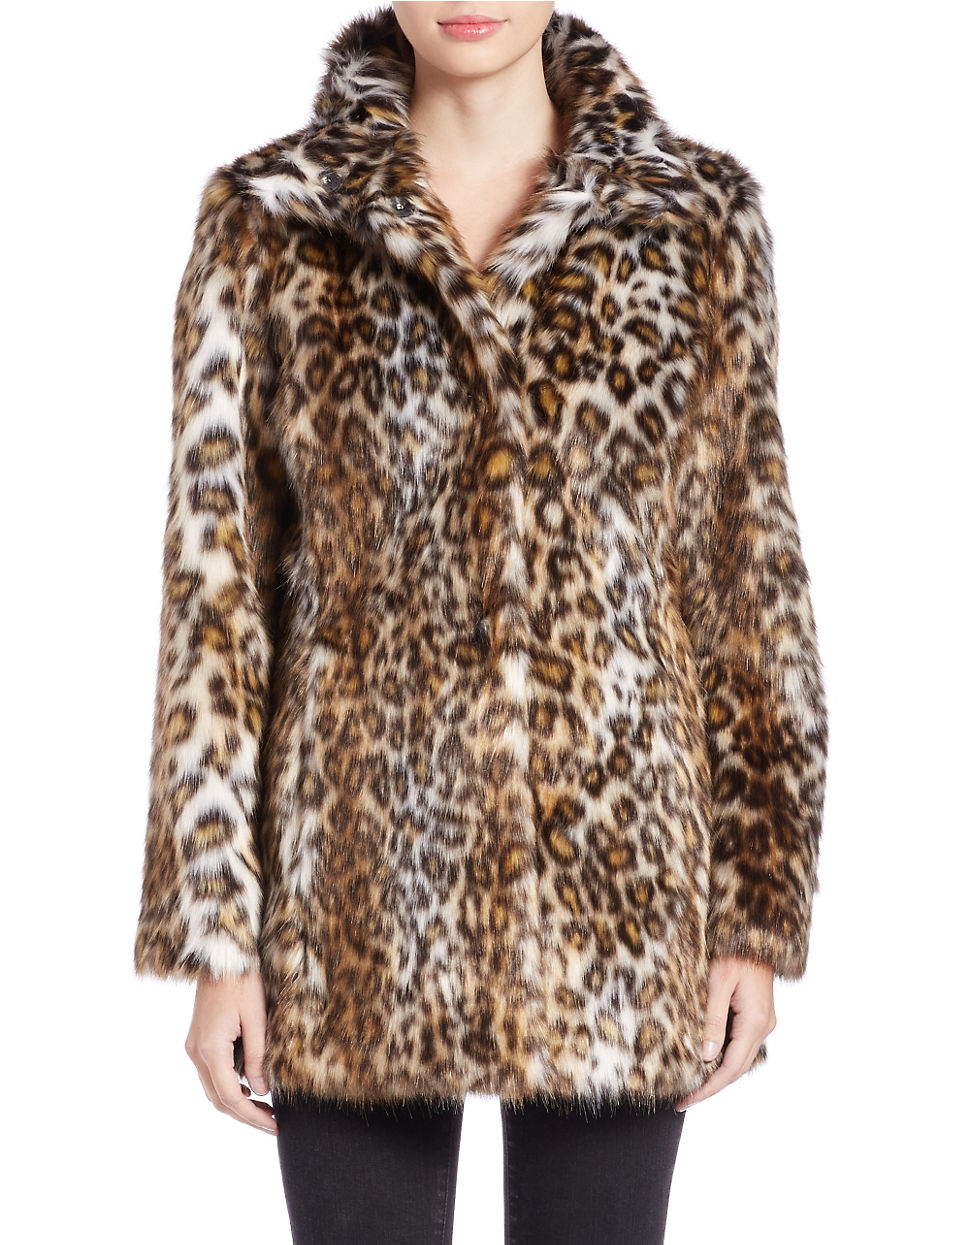 Lyst - Eliza J Leopard-print Faux Fur Coat